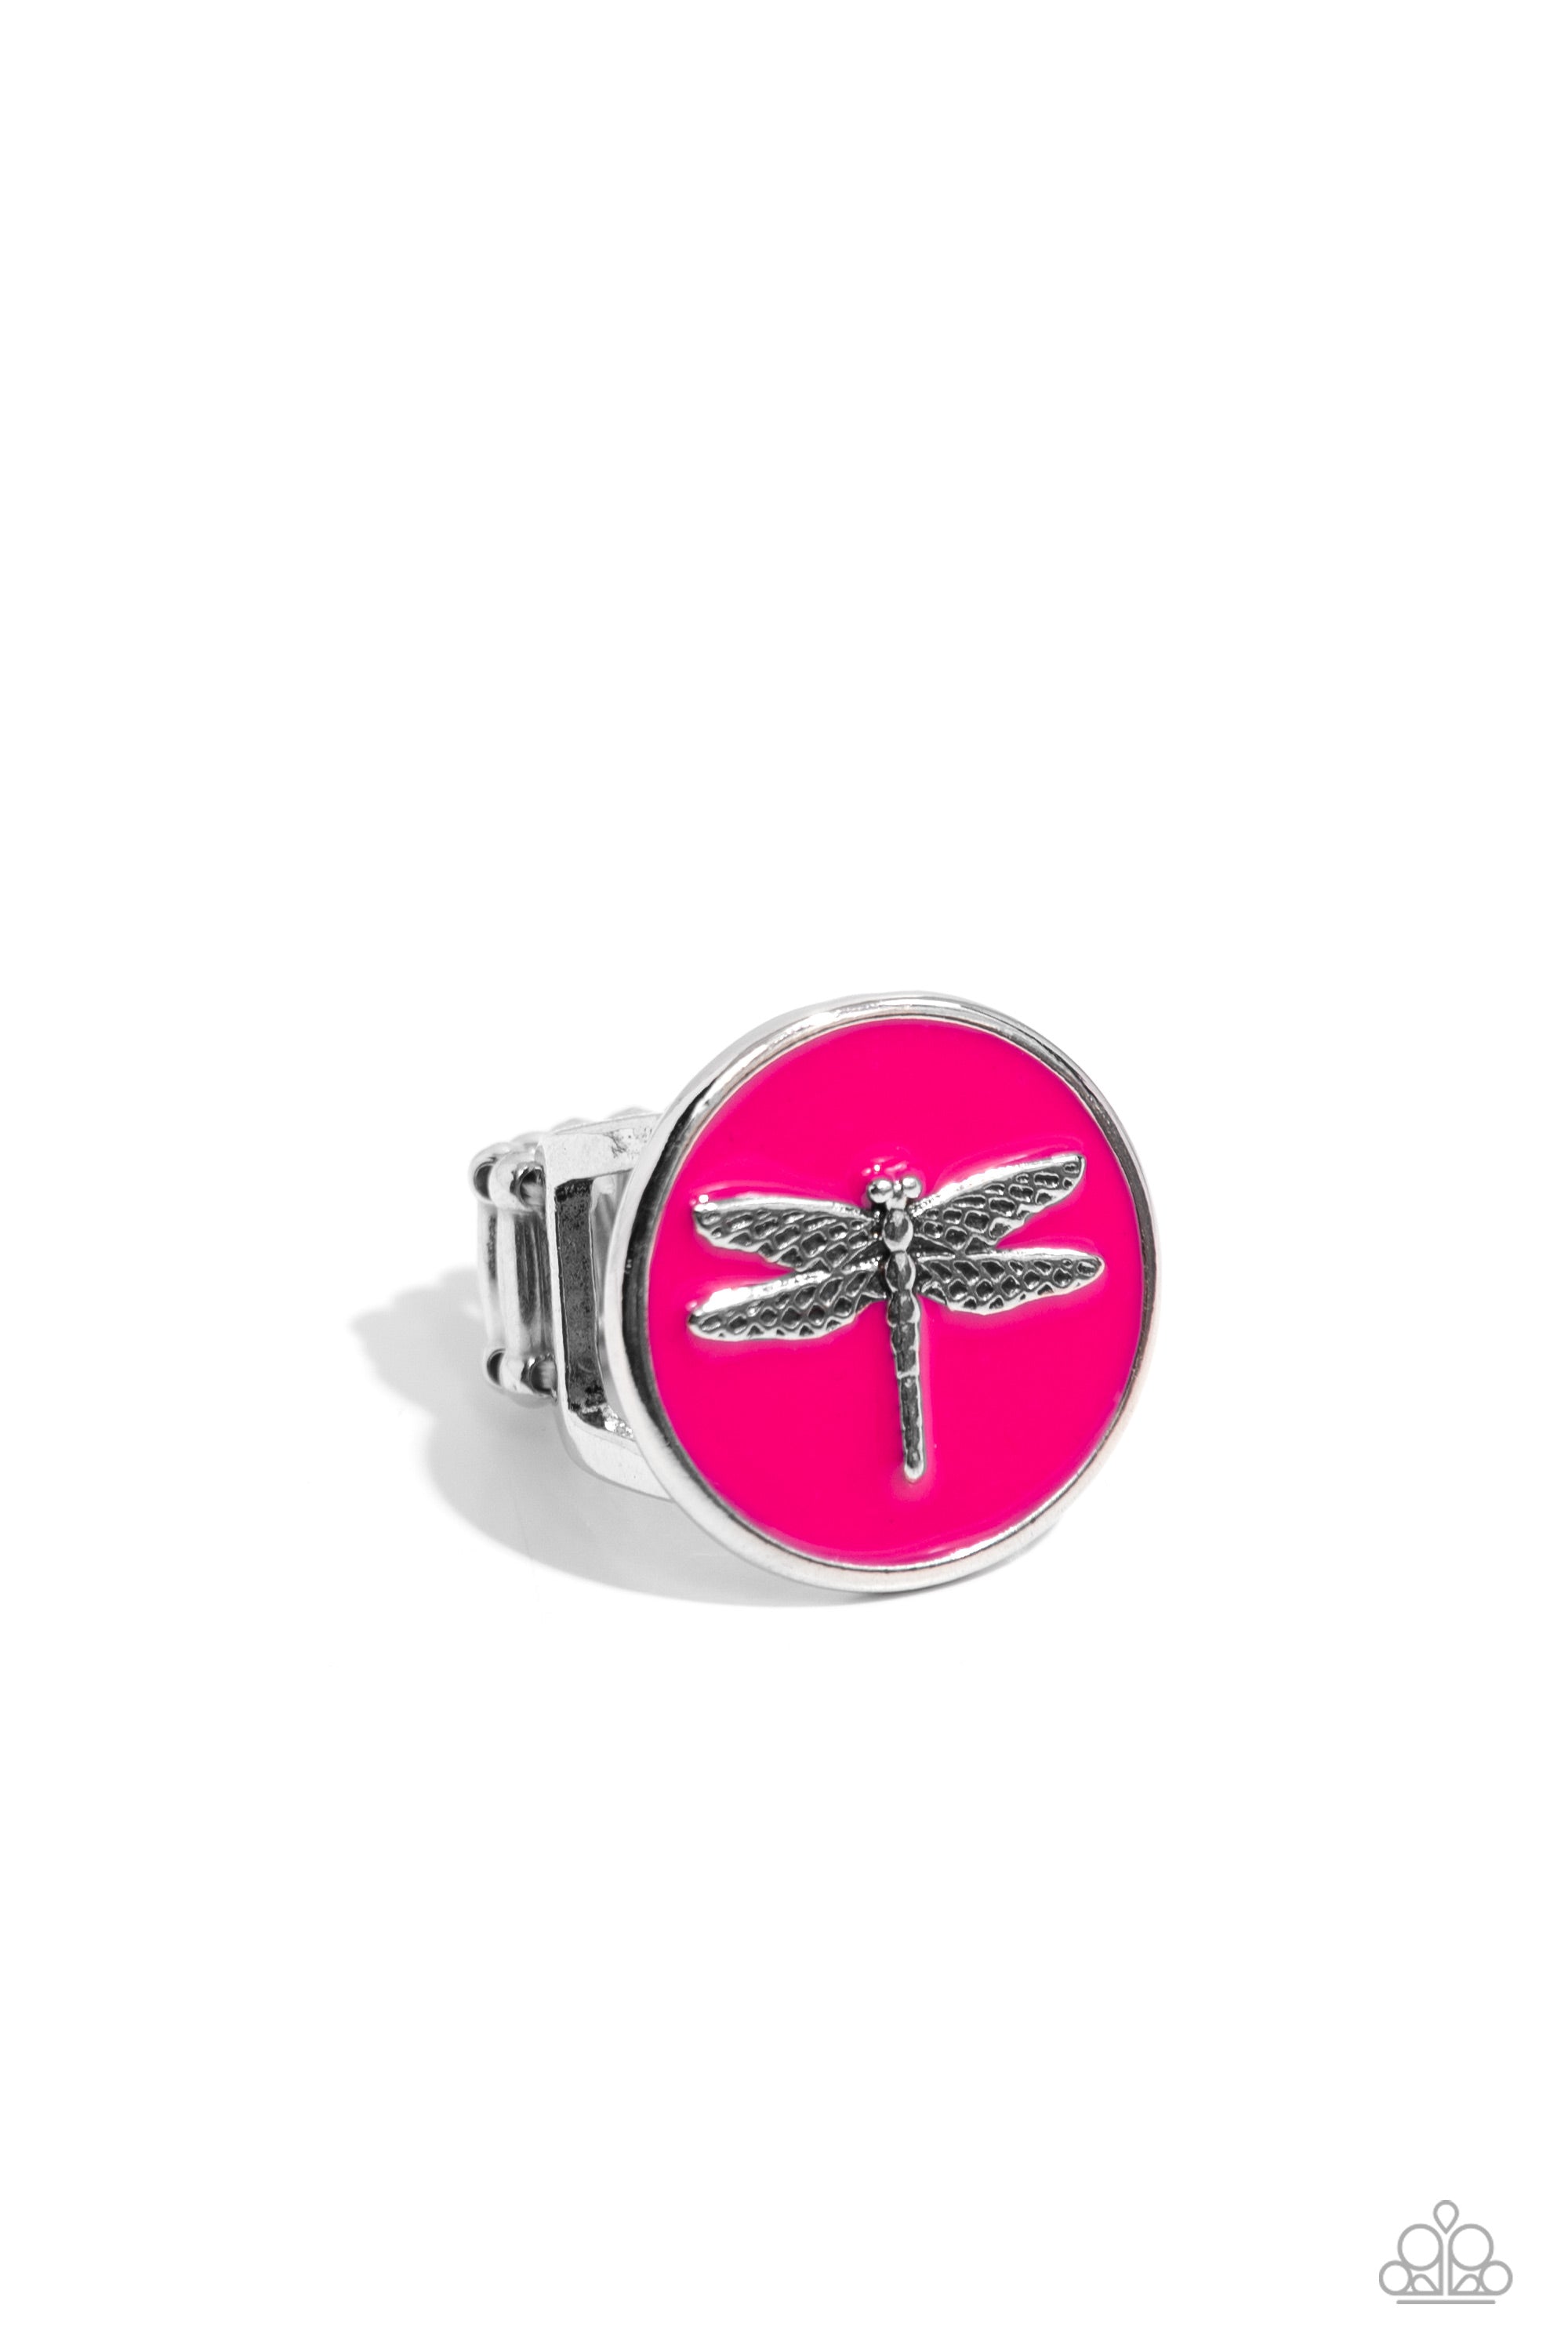 Paparazzi - Debonair Dragonfly - Pink